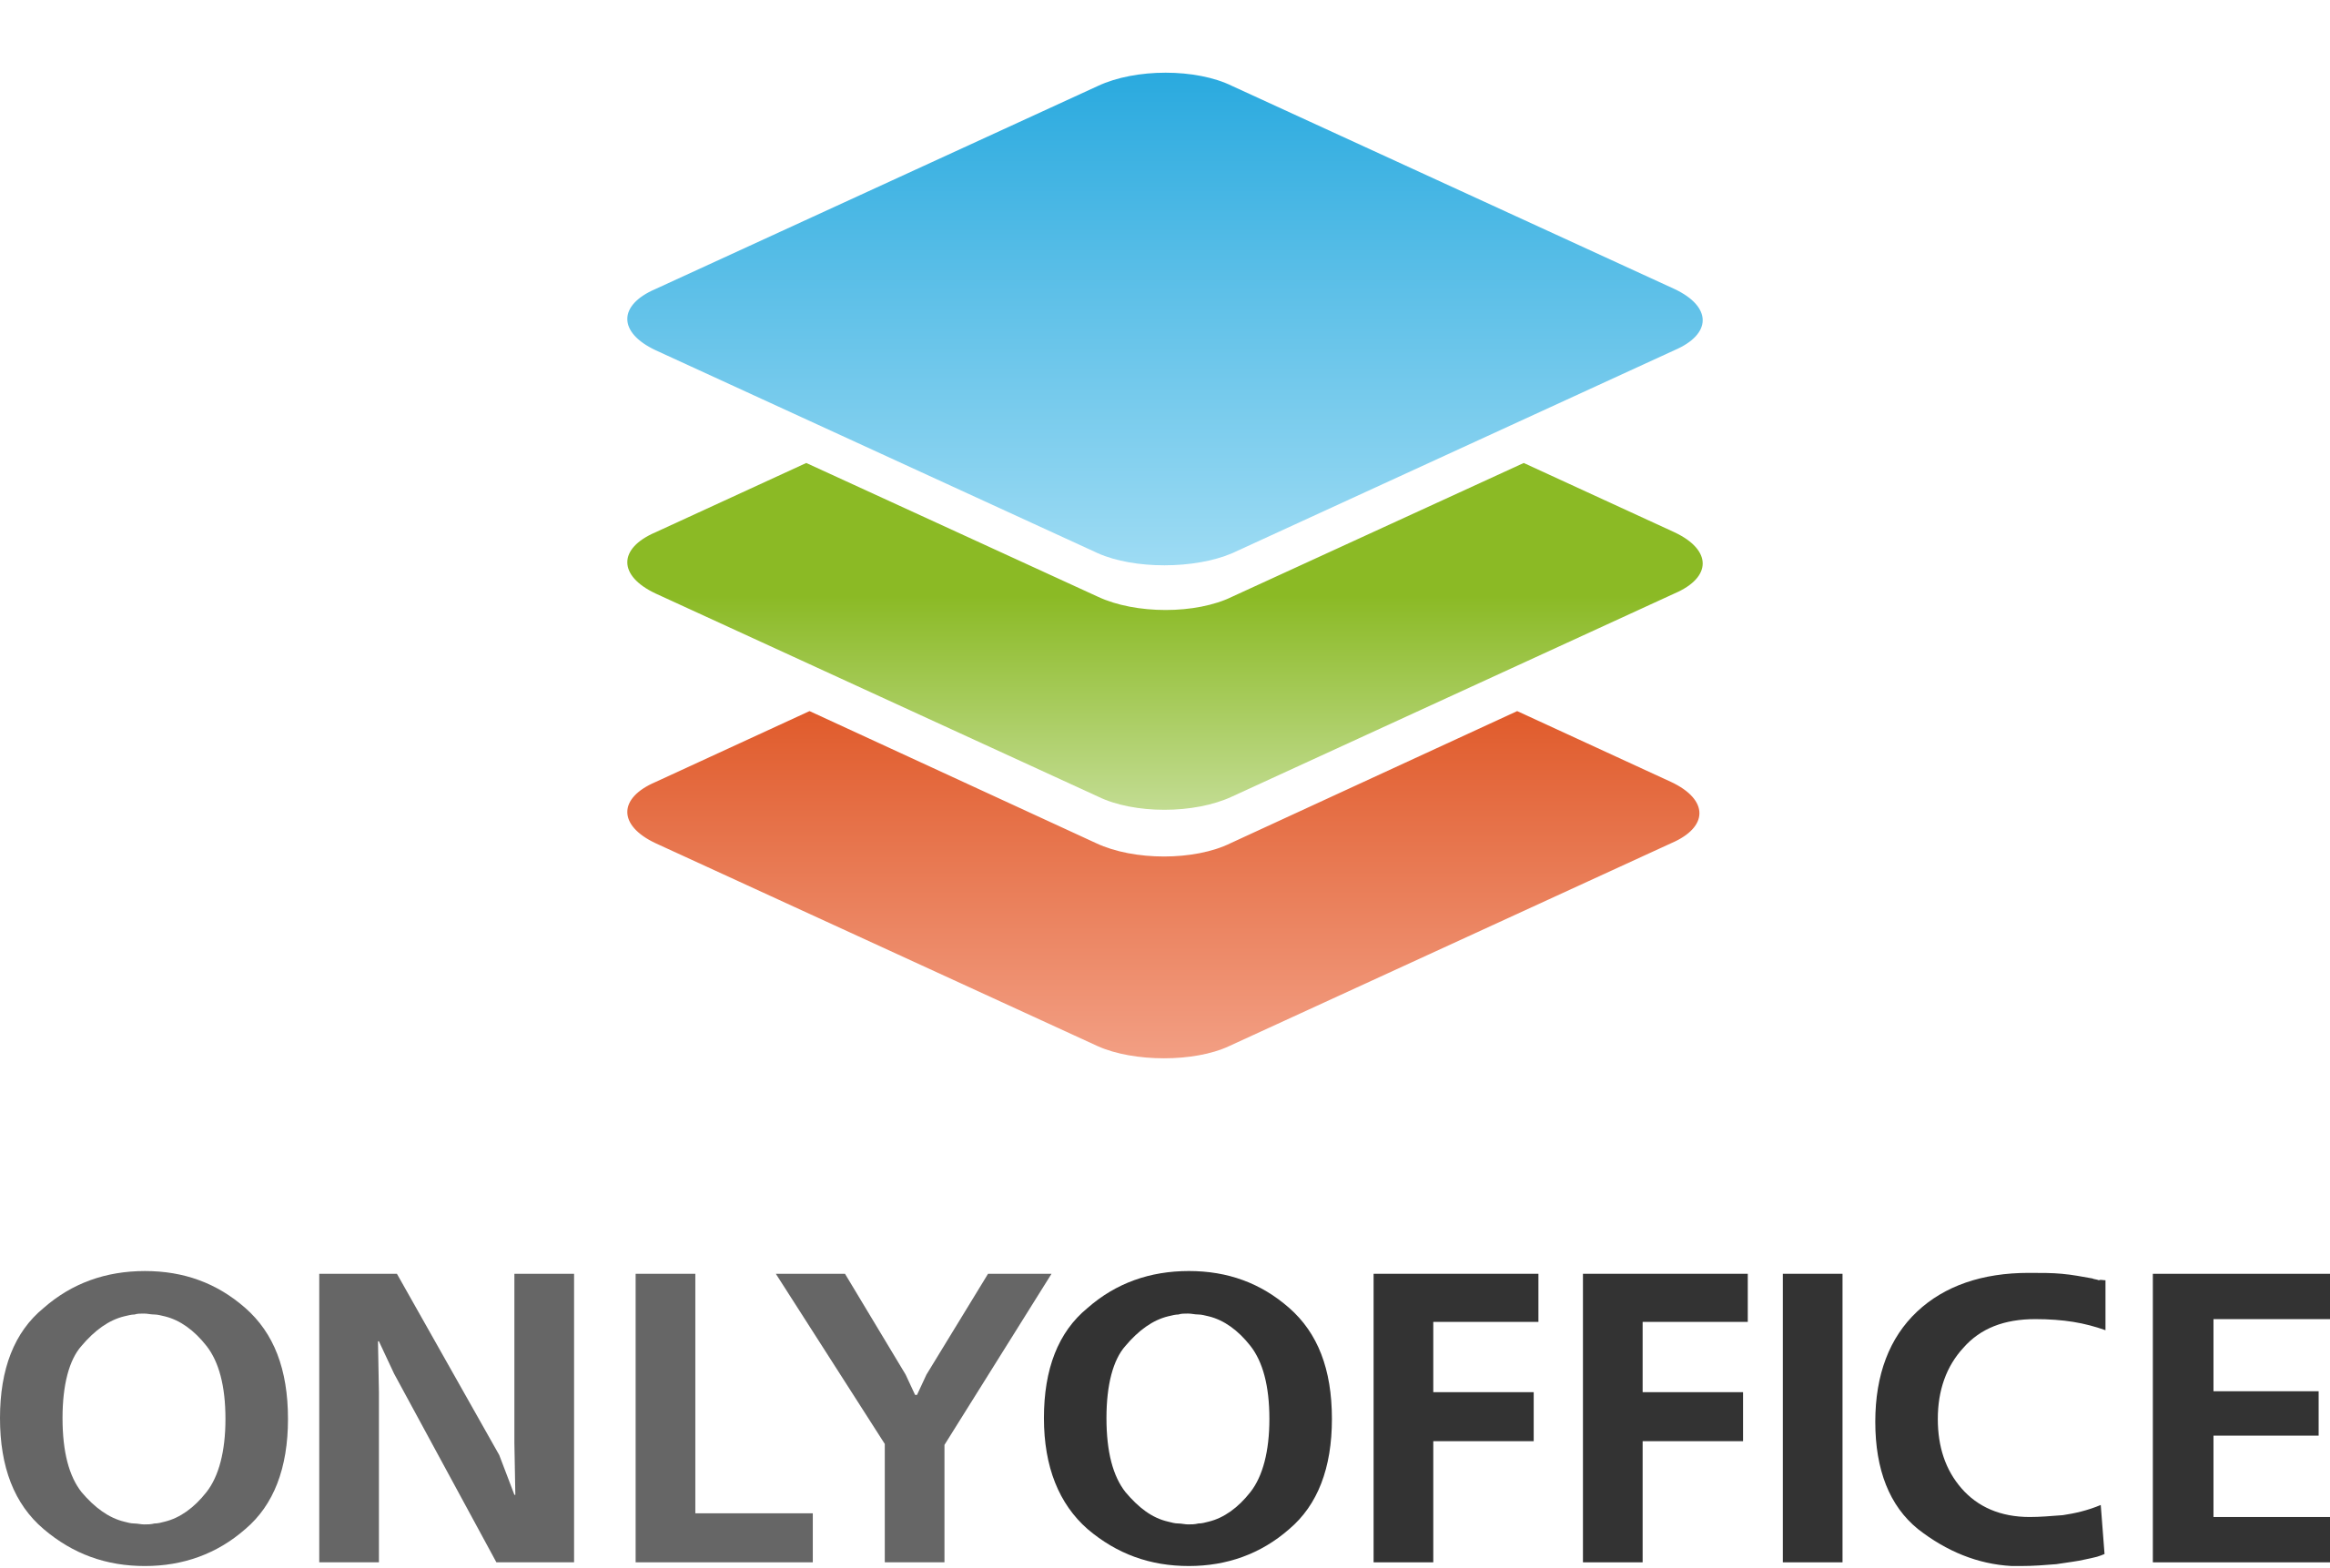 ONLYOFFICE_logo_(centered).svg